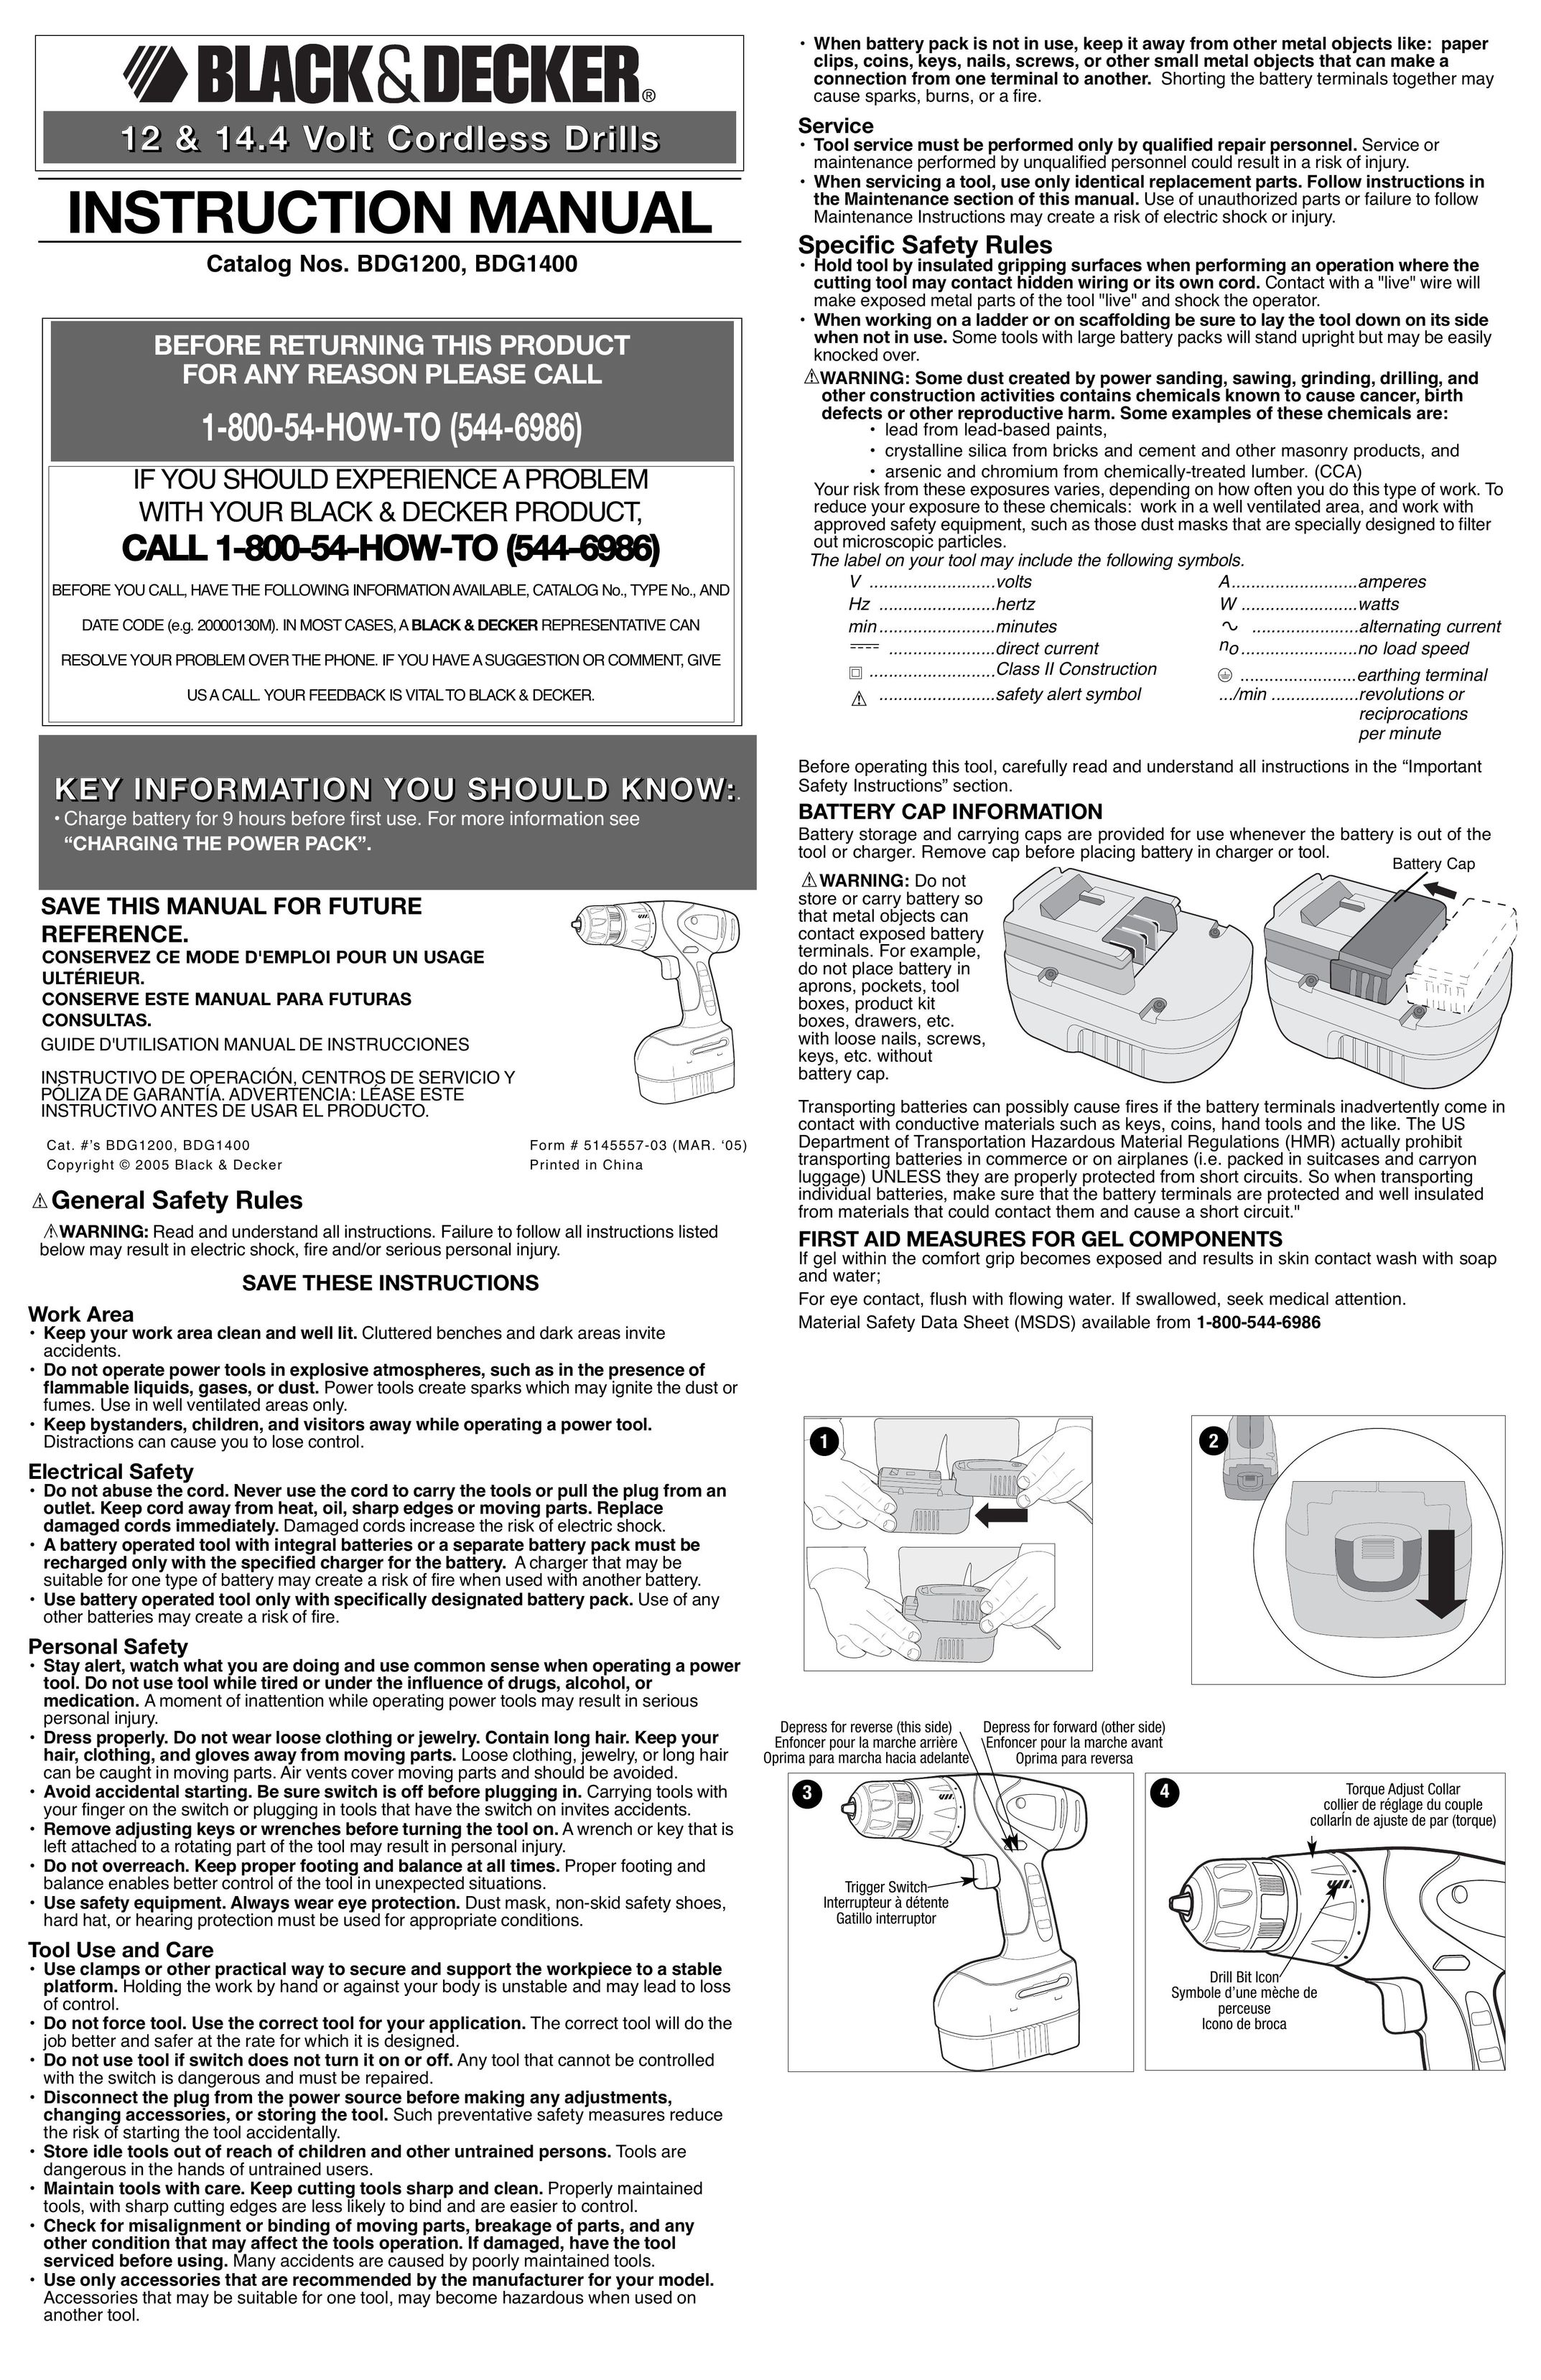 Black & Decker 5145557-03 Cordless Drill User Manual